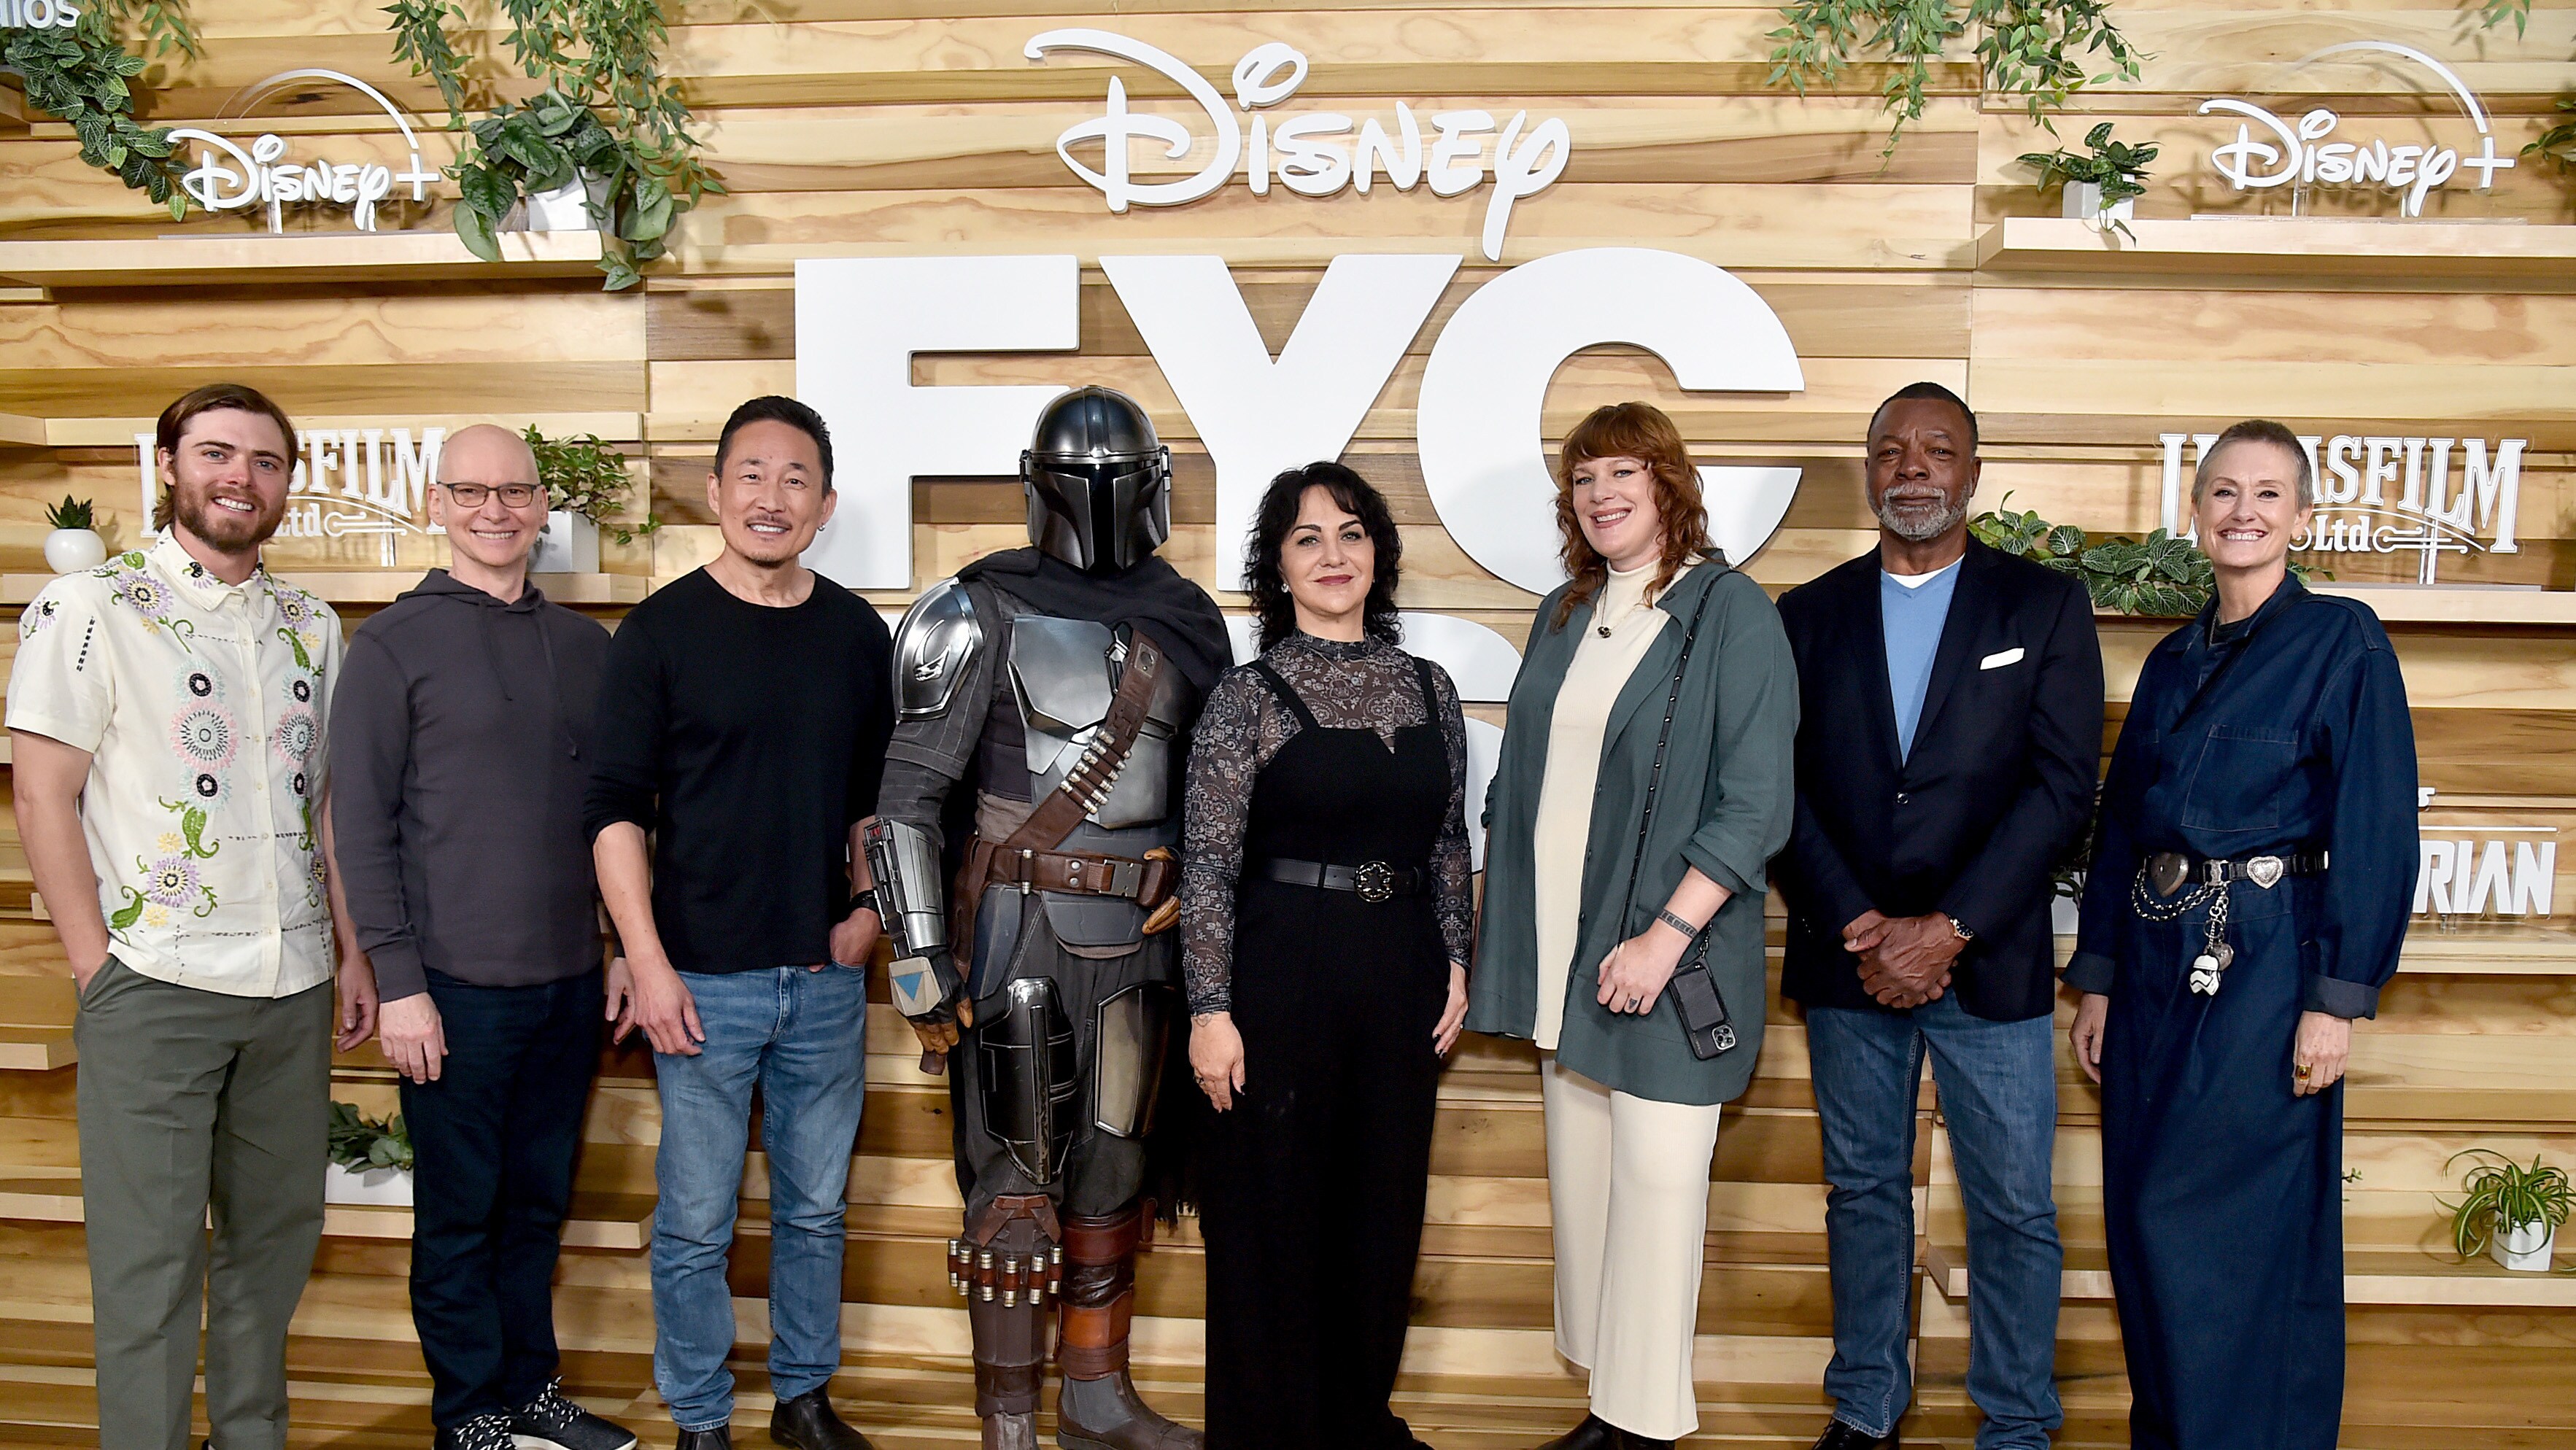 Disney+ Shares Photos From Lucasfilm’s “Star Wars: The Mandalorian” Season 3 Emmy FYC Event